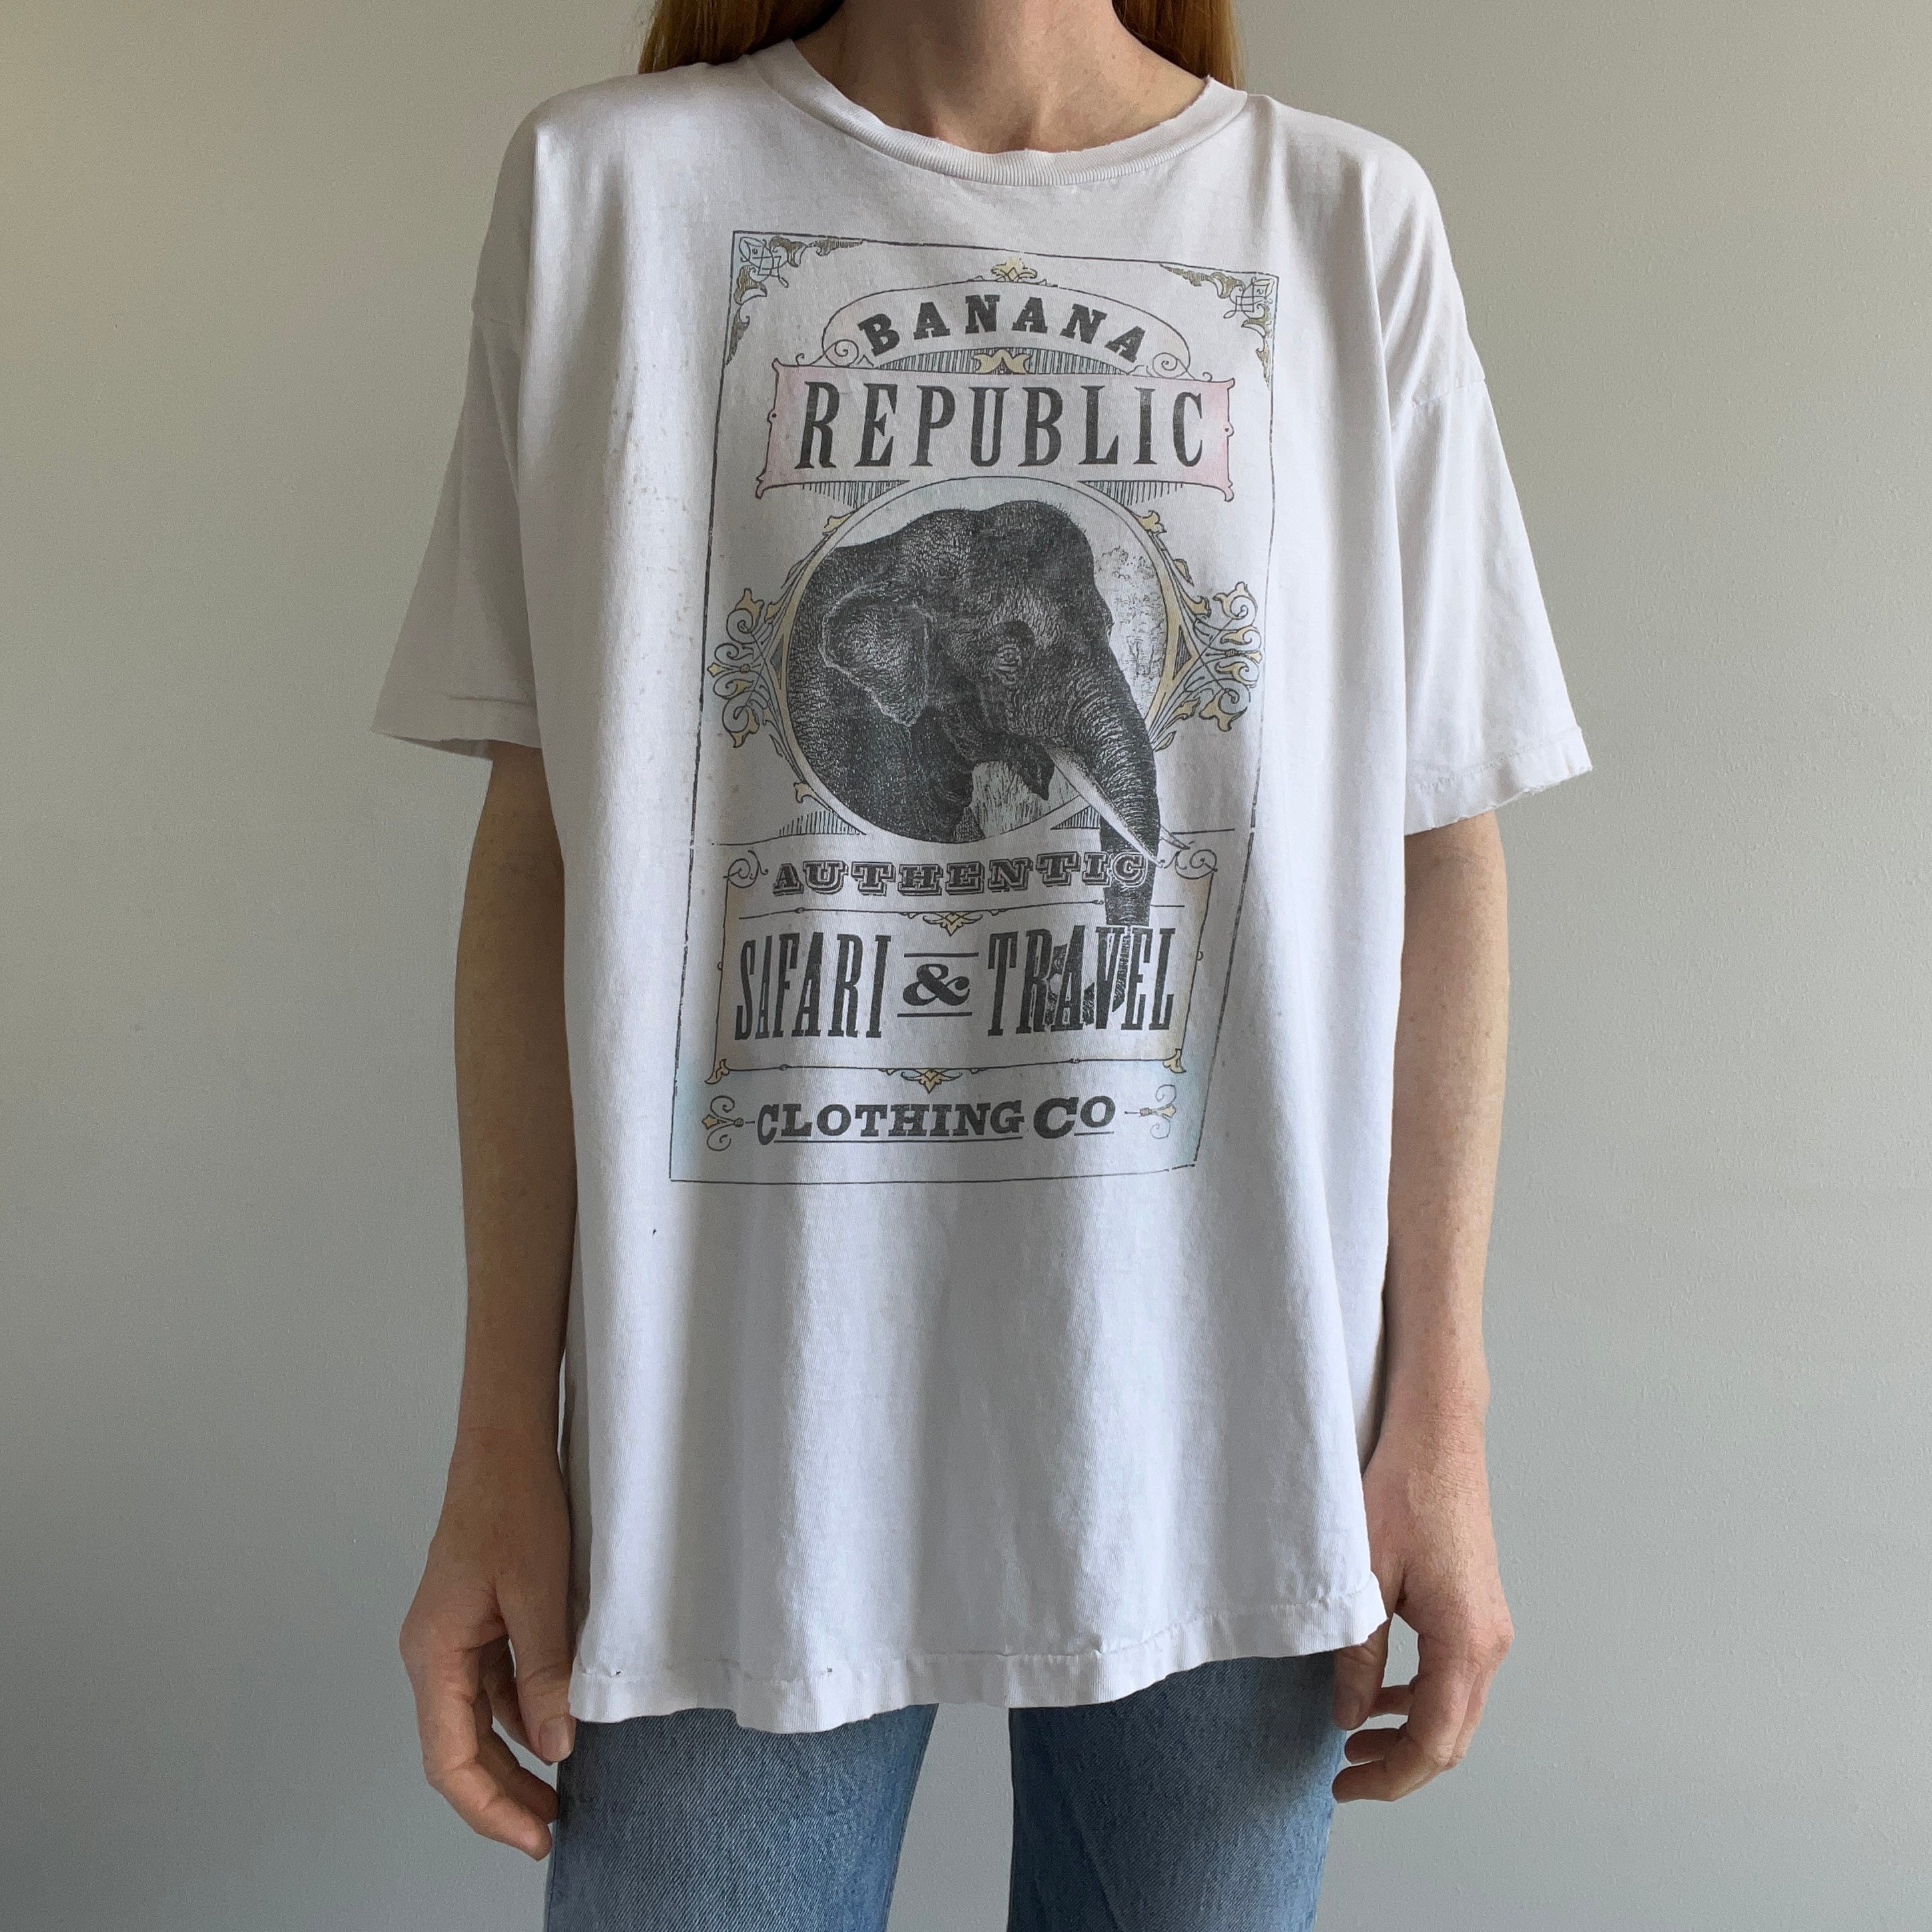 1982 or Earlier Banana Republic Safari and Travel Clothing Co - Tattered T-Shirt